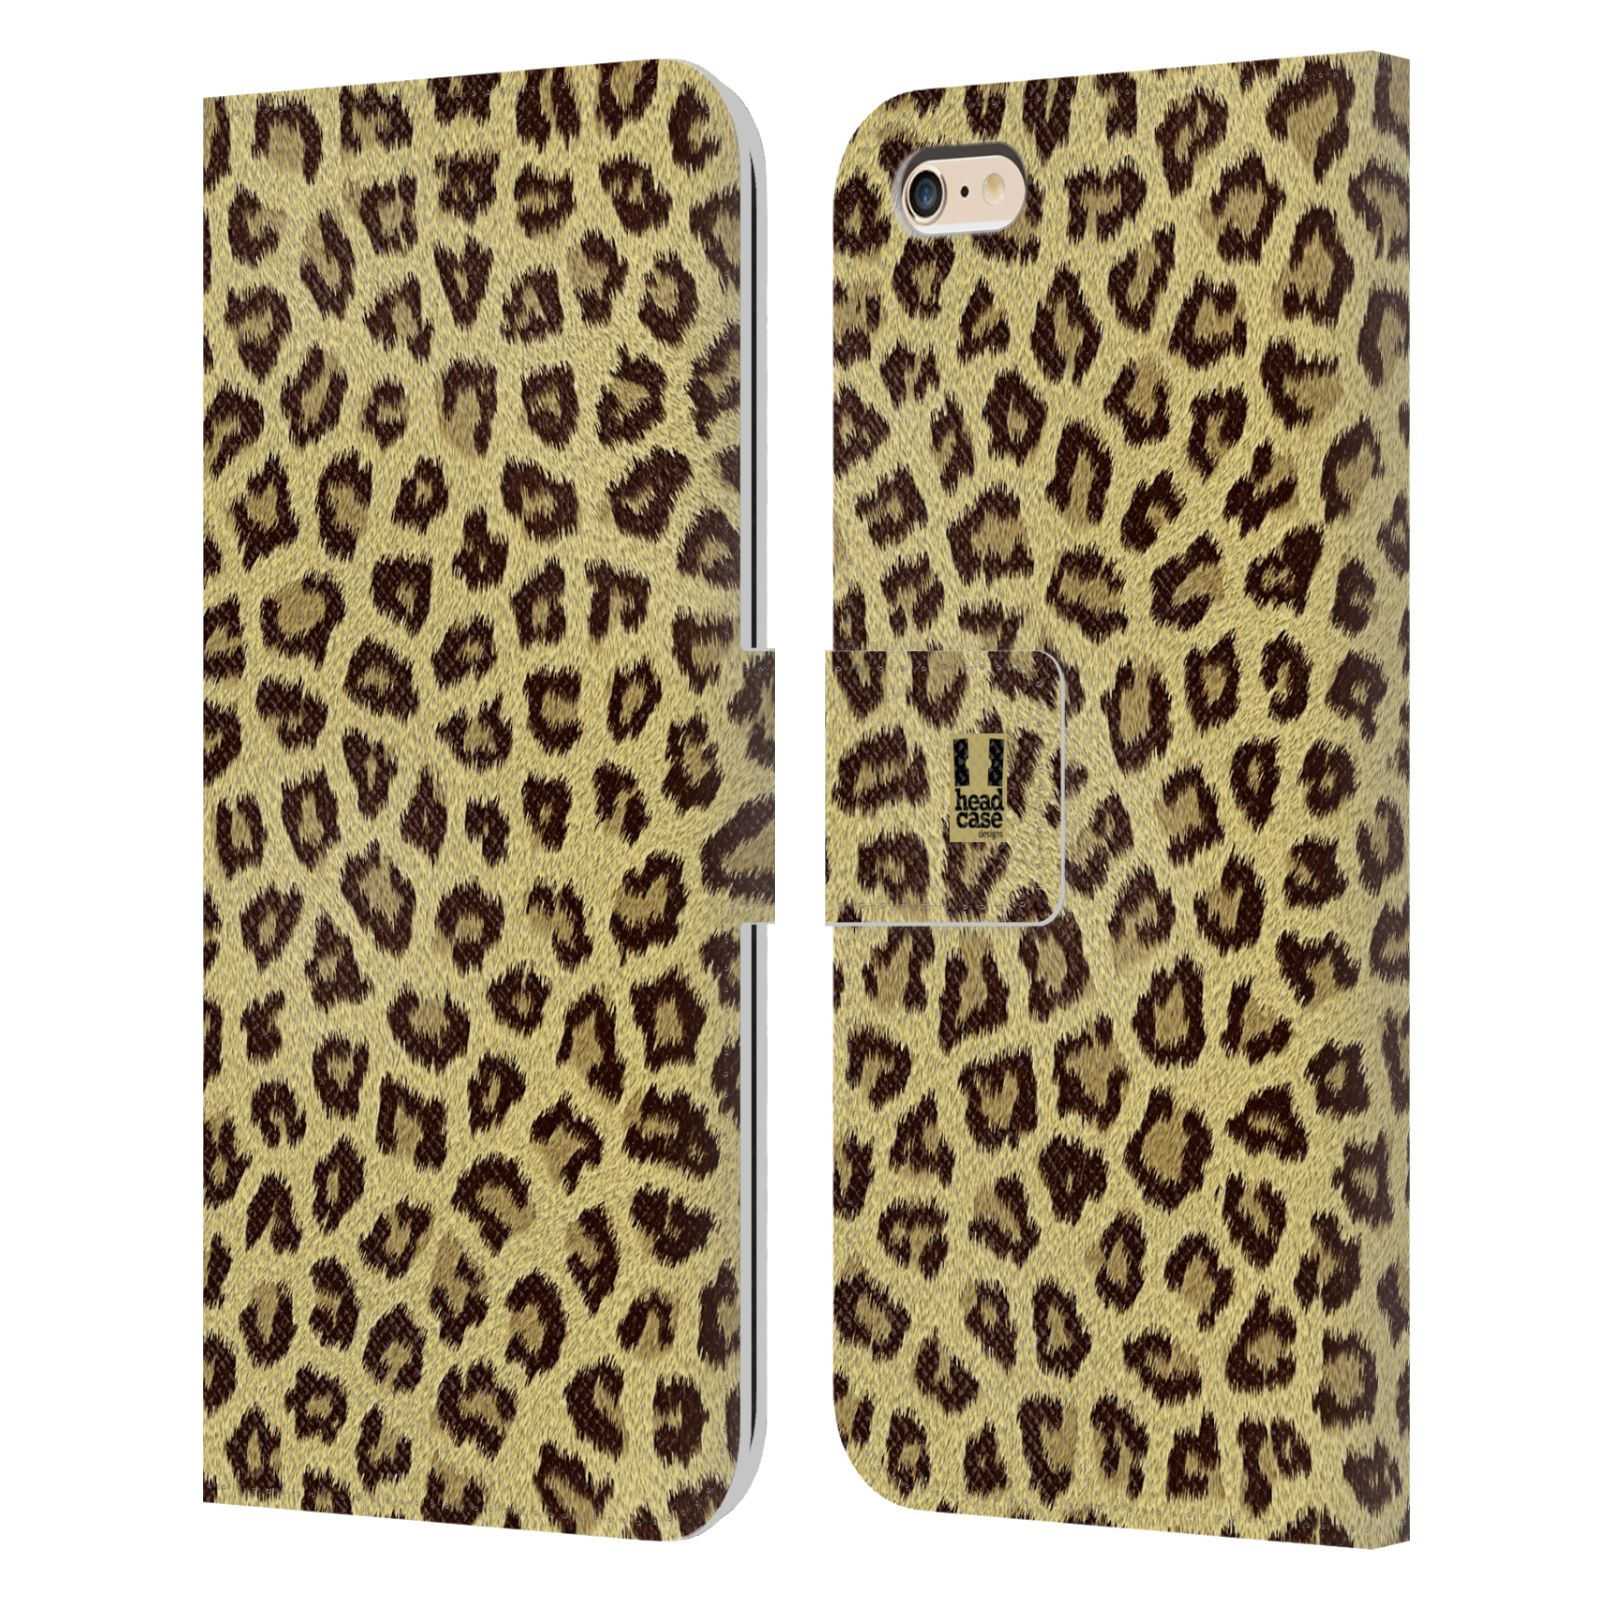 HEAD CASE Flipové pouzdro pro mobil Apple Iphone 6 PLUS / 6S PLUS zvíře srst divoká kolekce jaguár, gepard